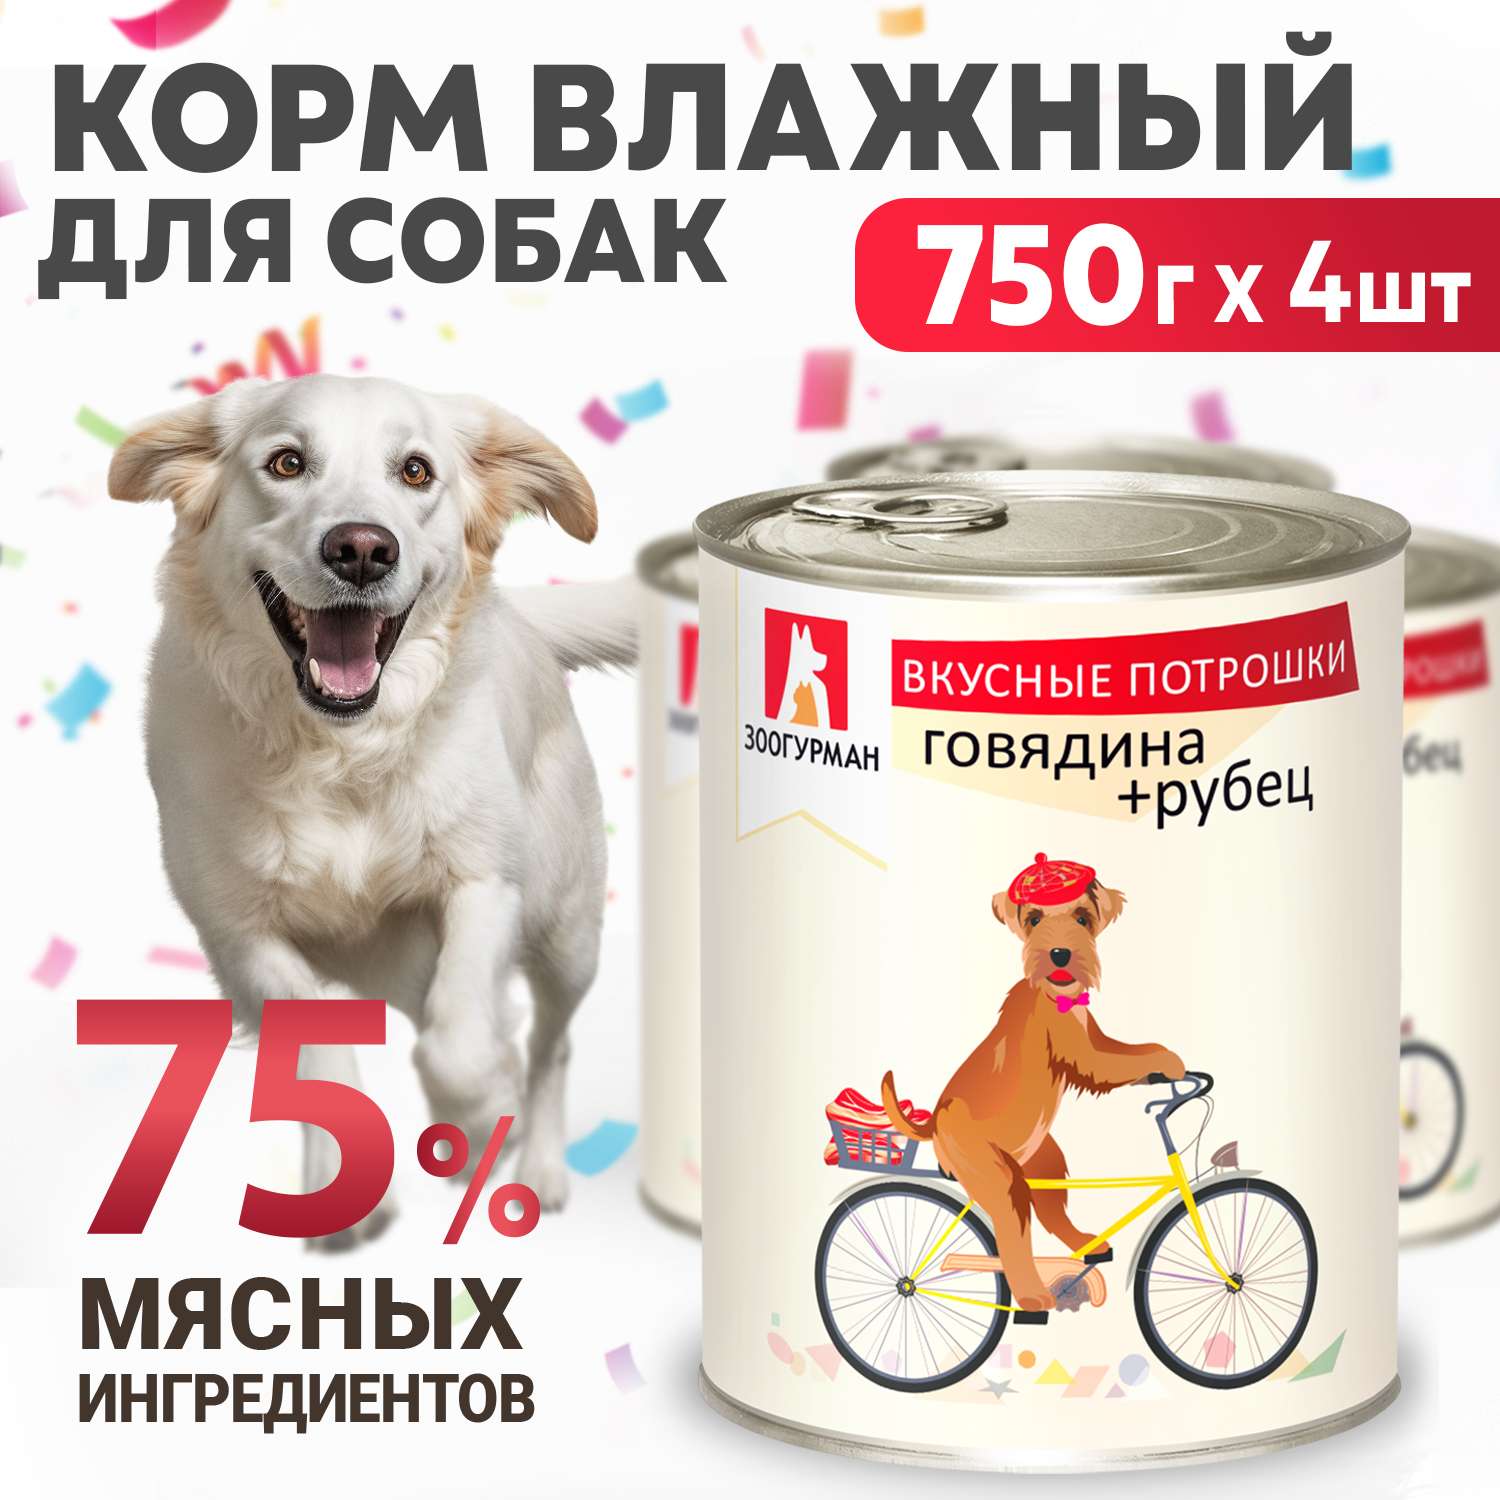 Корм влажный Зоогурман для собак Вкусные потрошки Говядина + Рубец 750 гр х 4 шт. - фото 1